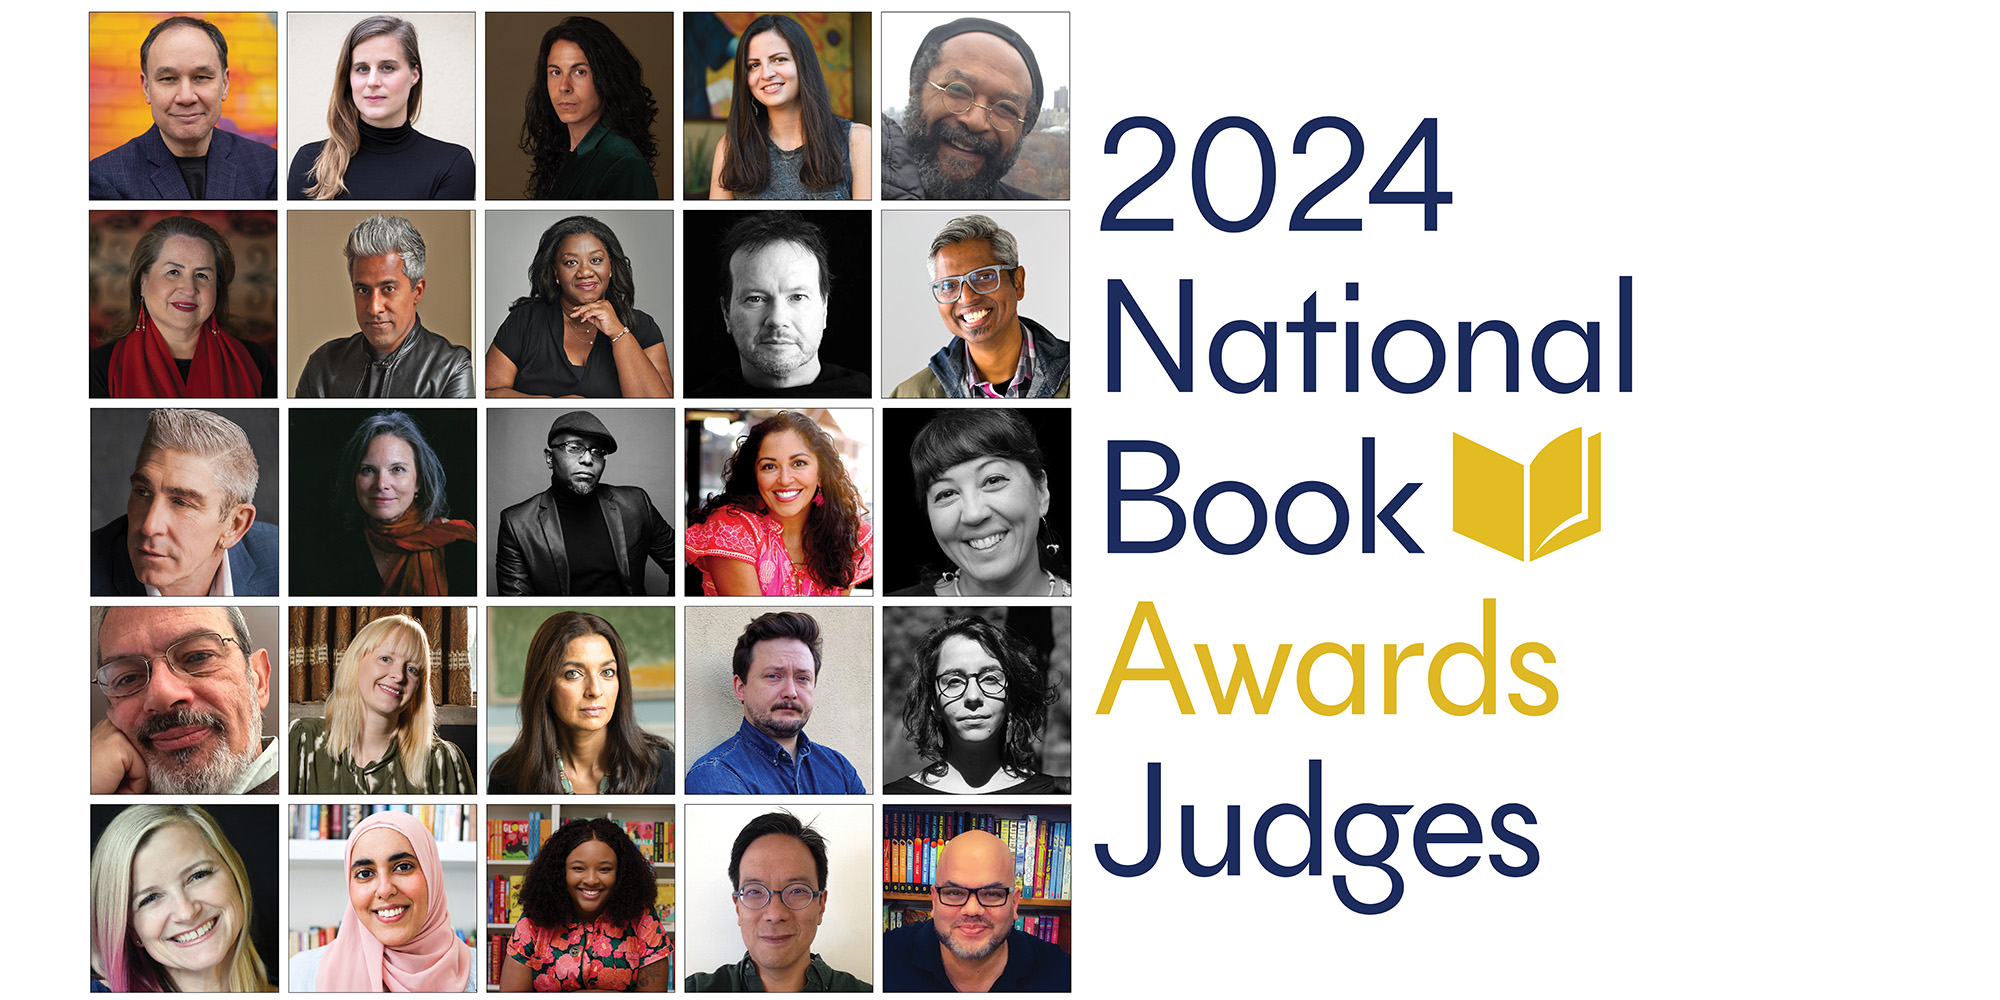 National Book Awards Judges